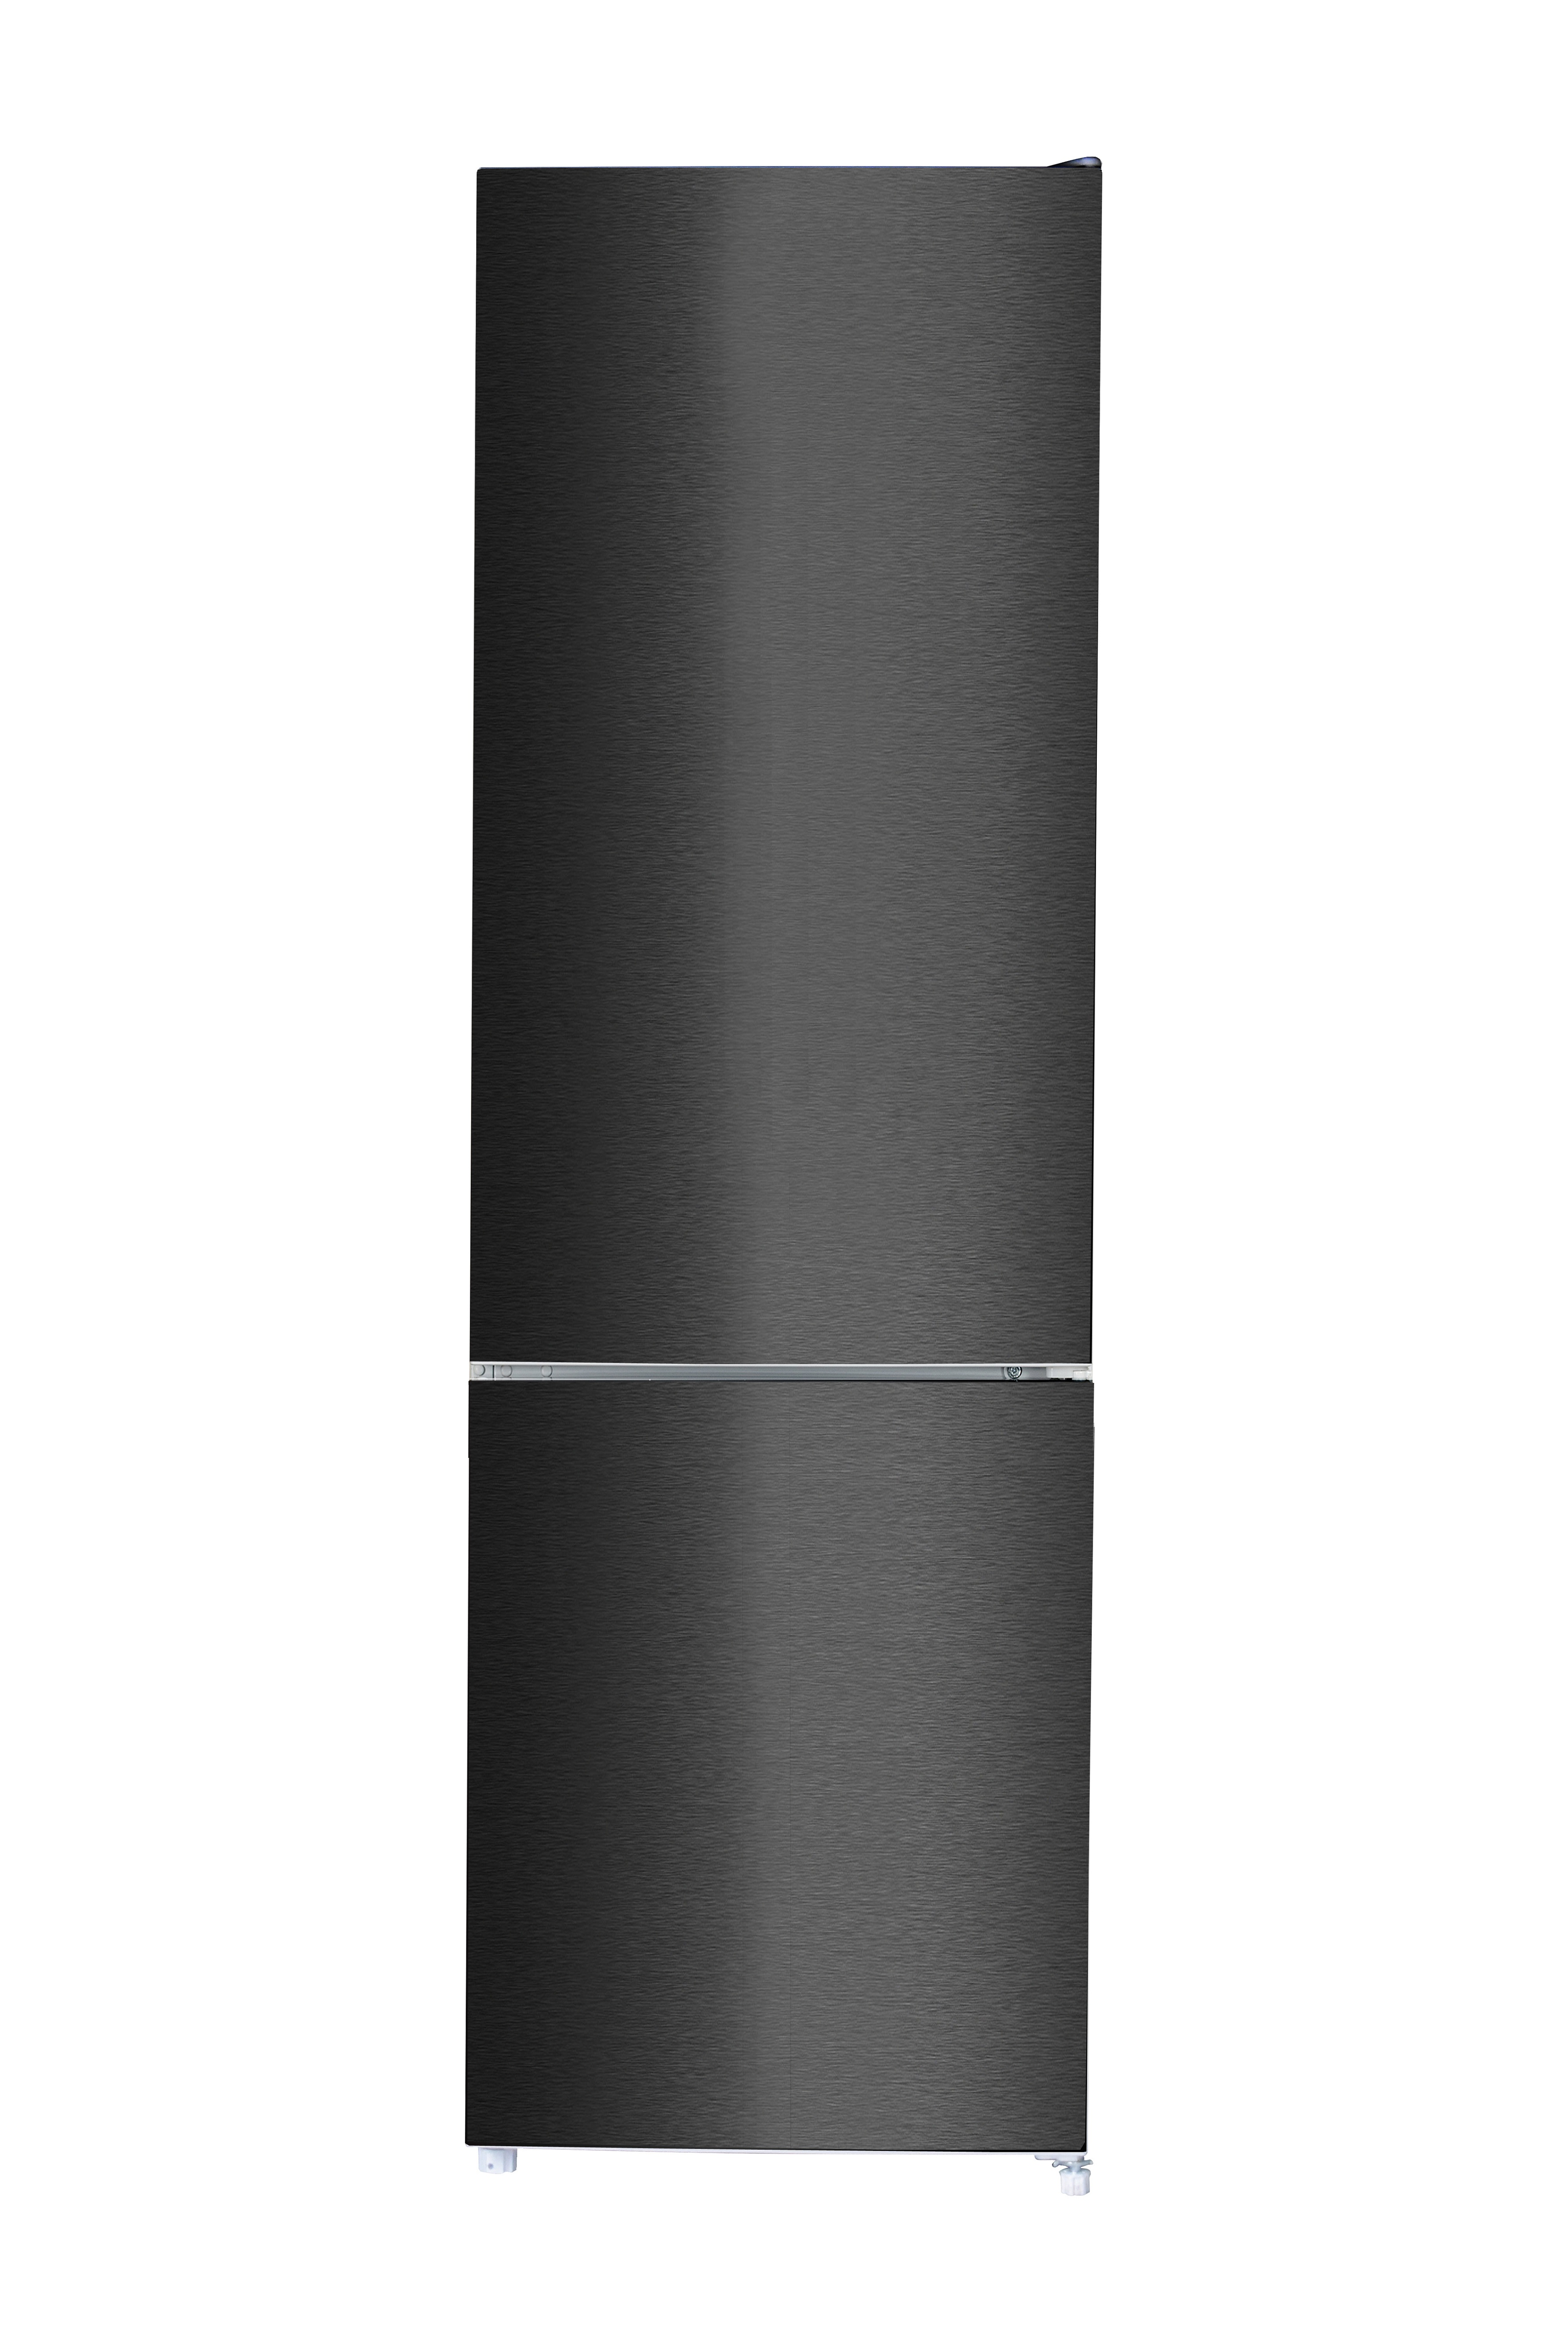 RESPEKTA Steel) Kühlschrank Black mm hoch, (D, 1760 KG176BS-37